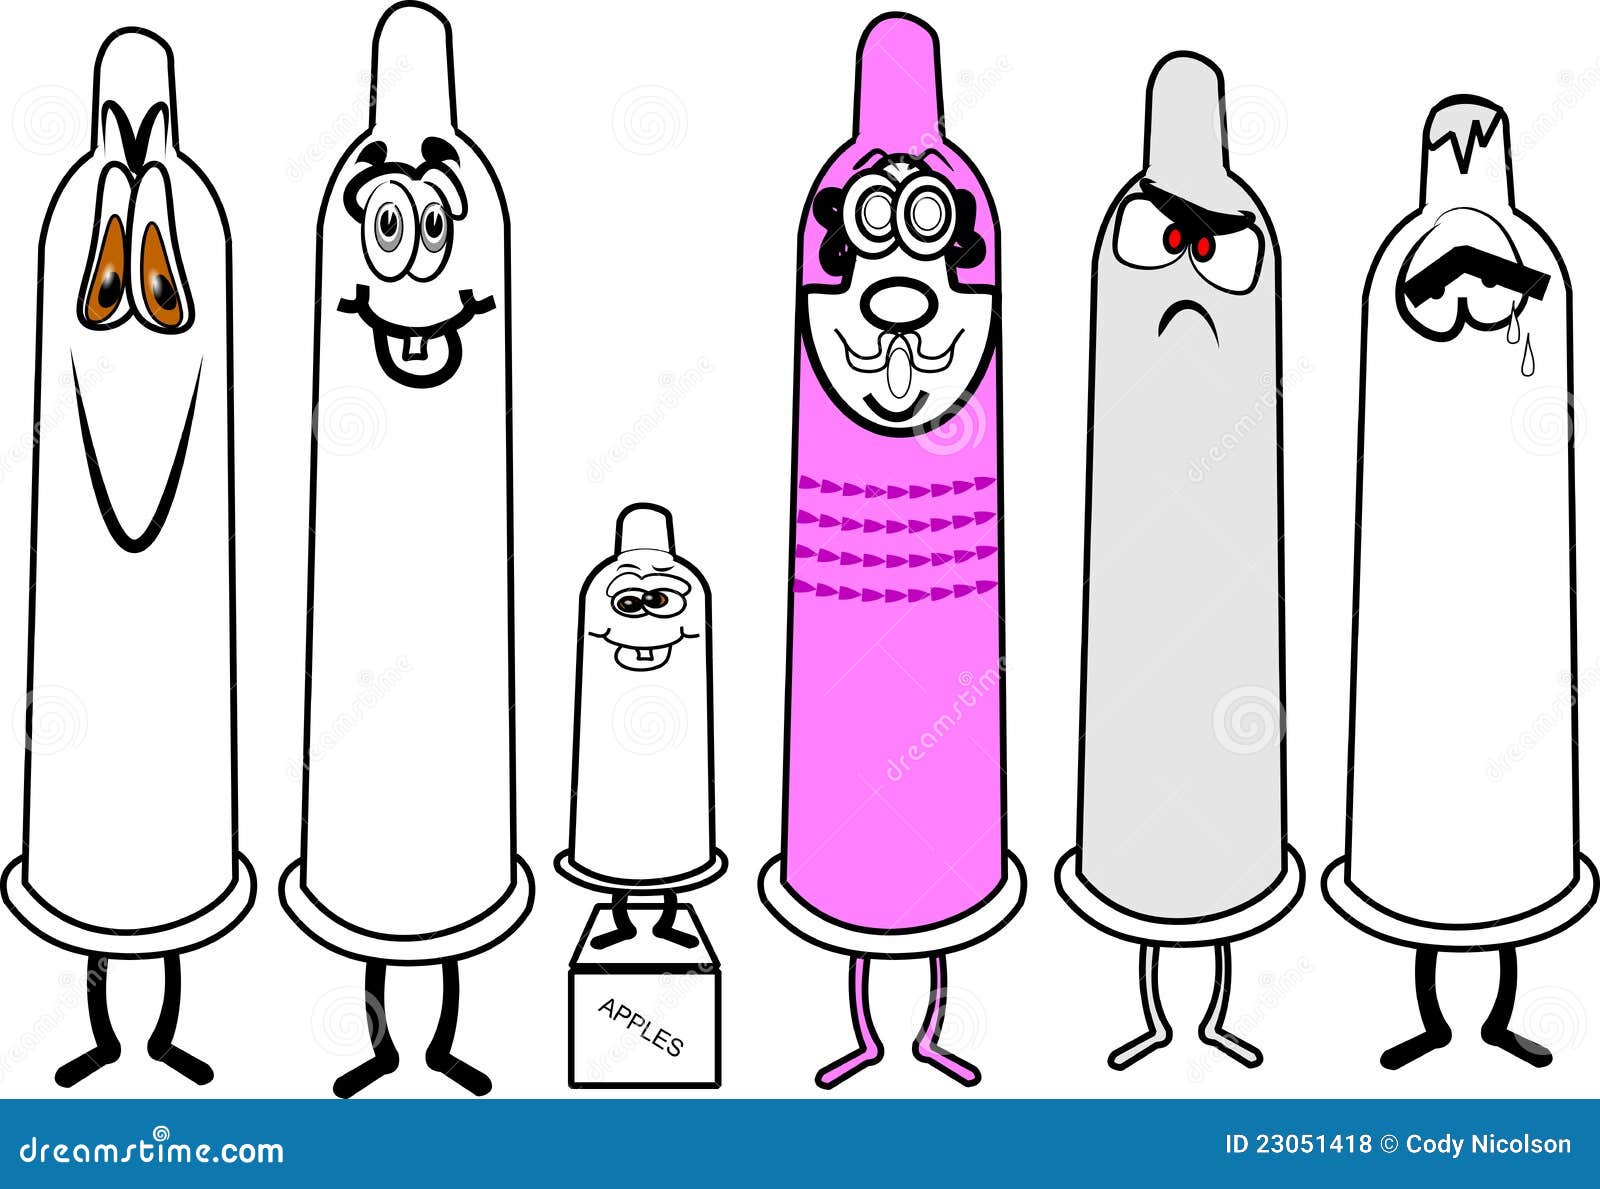 Cartoon Condom Vector Images (over 1000)